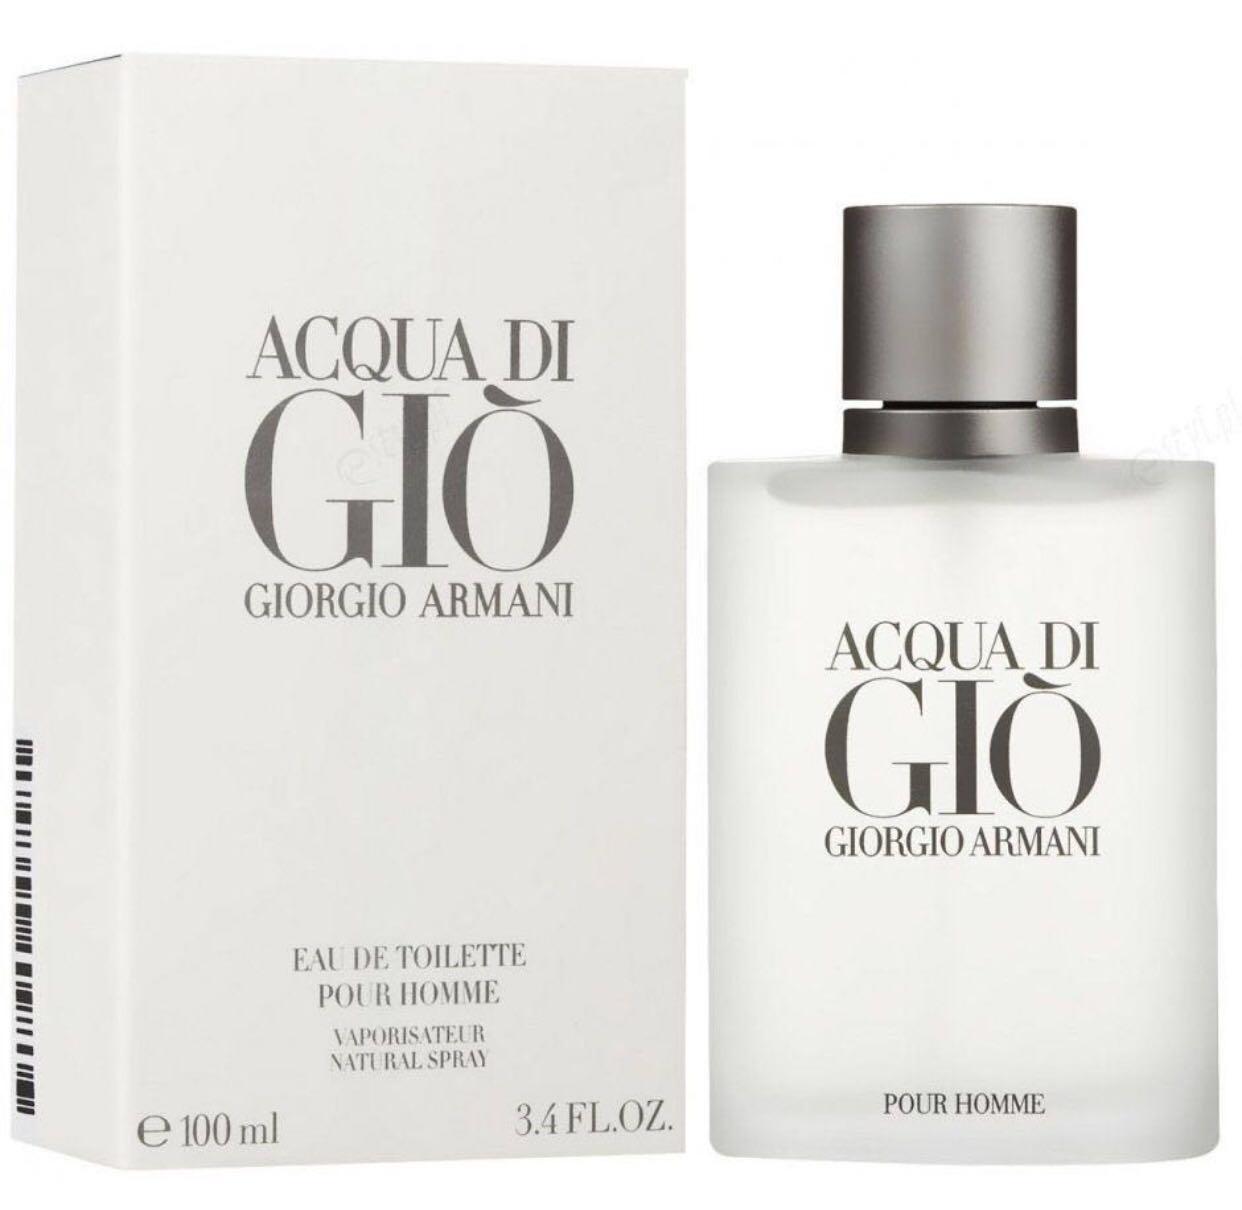 Acqua Di Gio Pour Home Giorgio Armani 100ml Health Beauty Perfumes Deodorants On Carousell